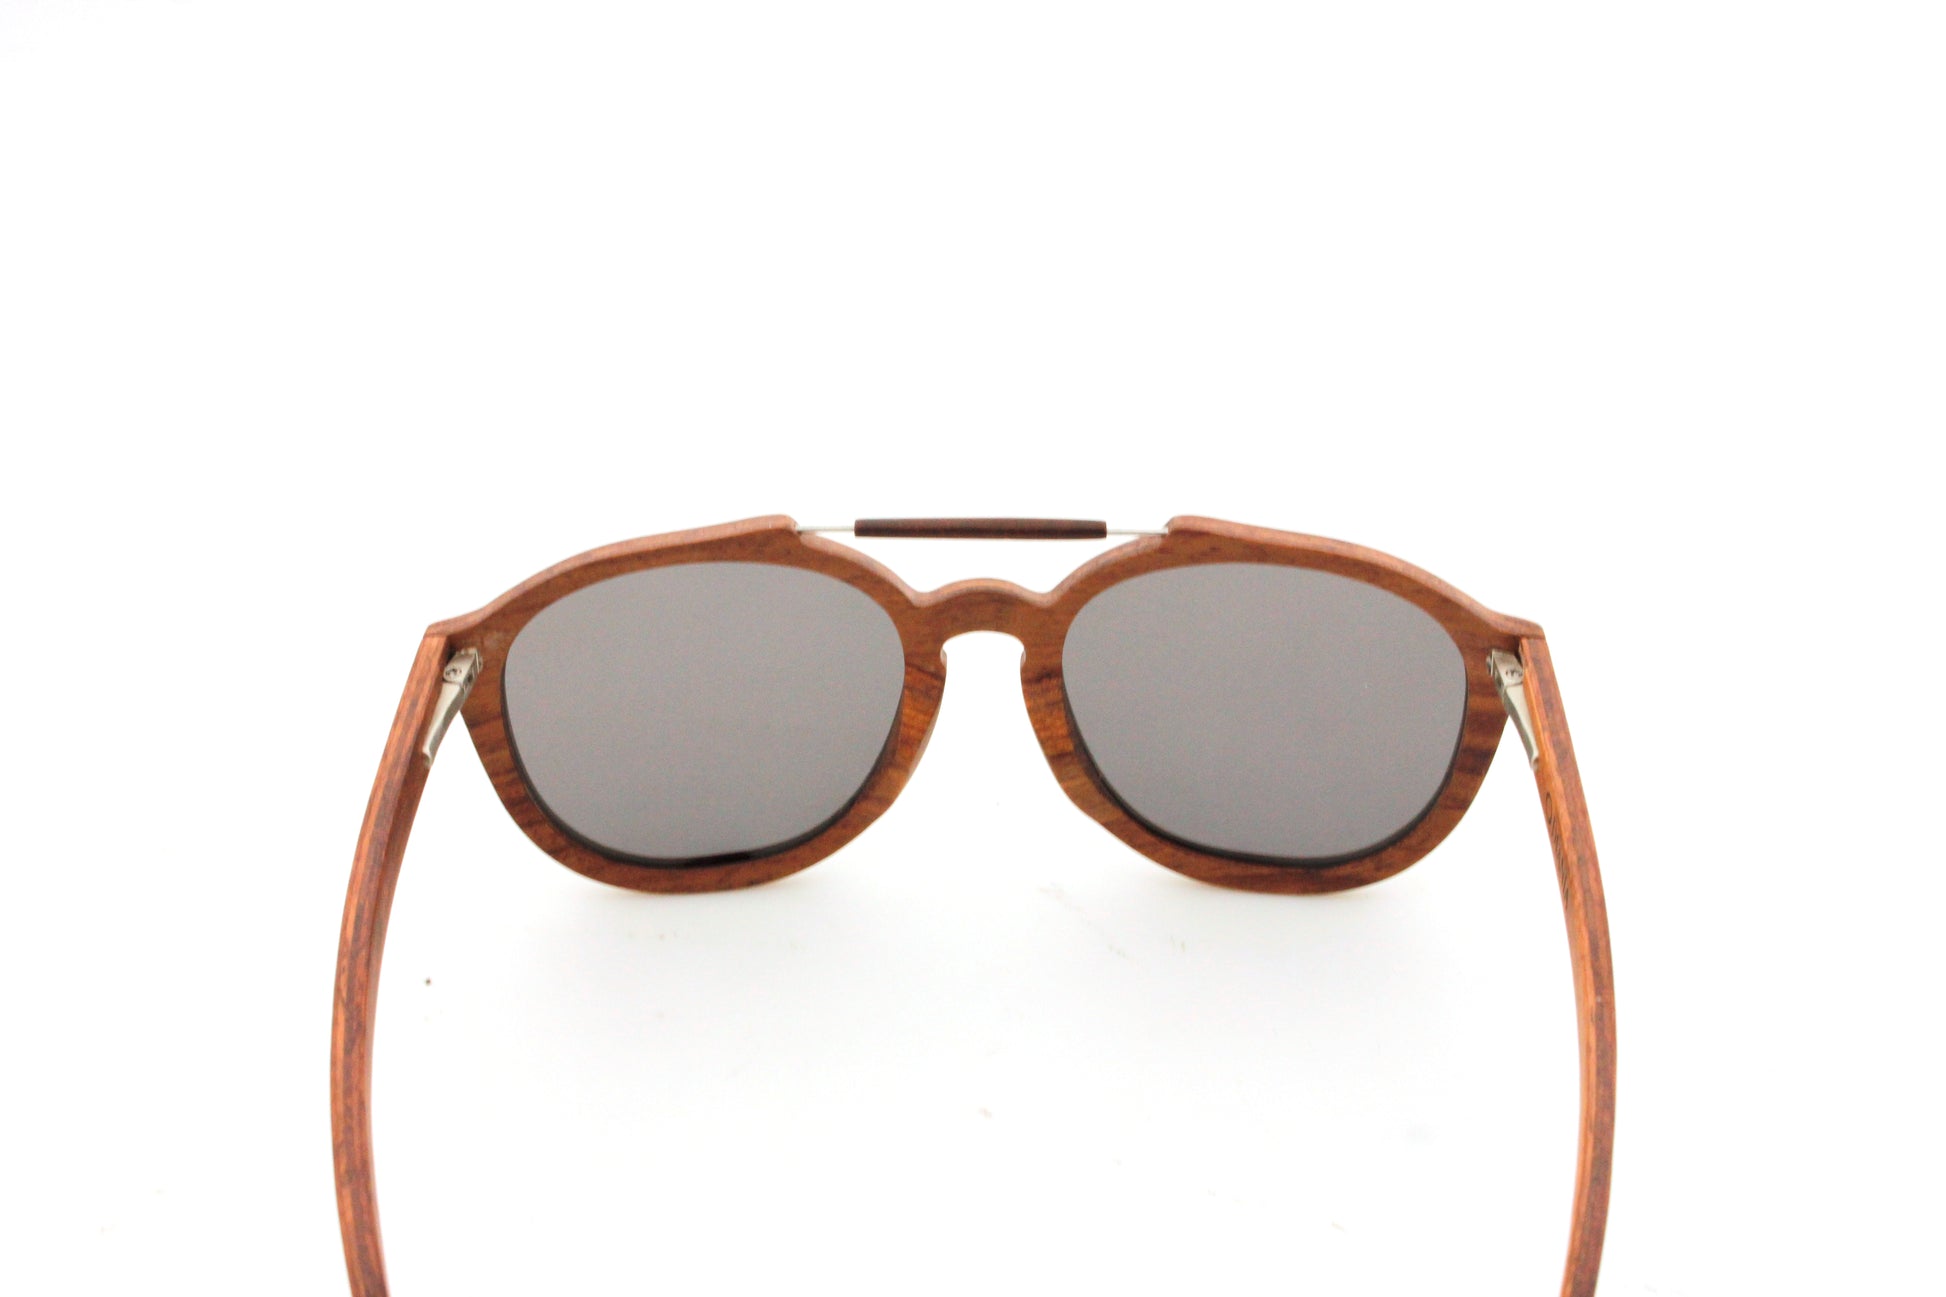 Barcella bubinga wood sunglasses view from behind